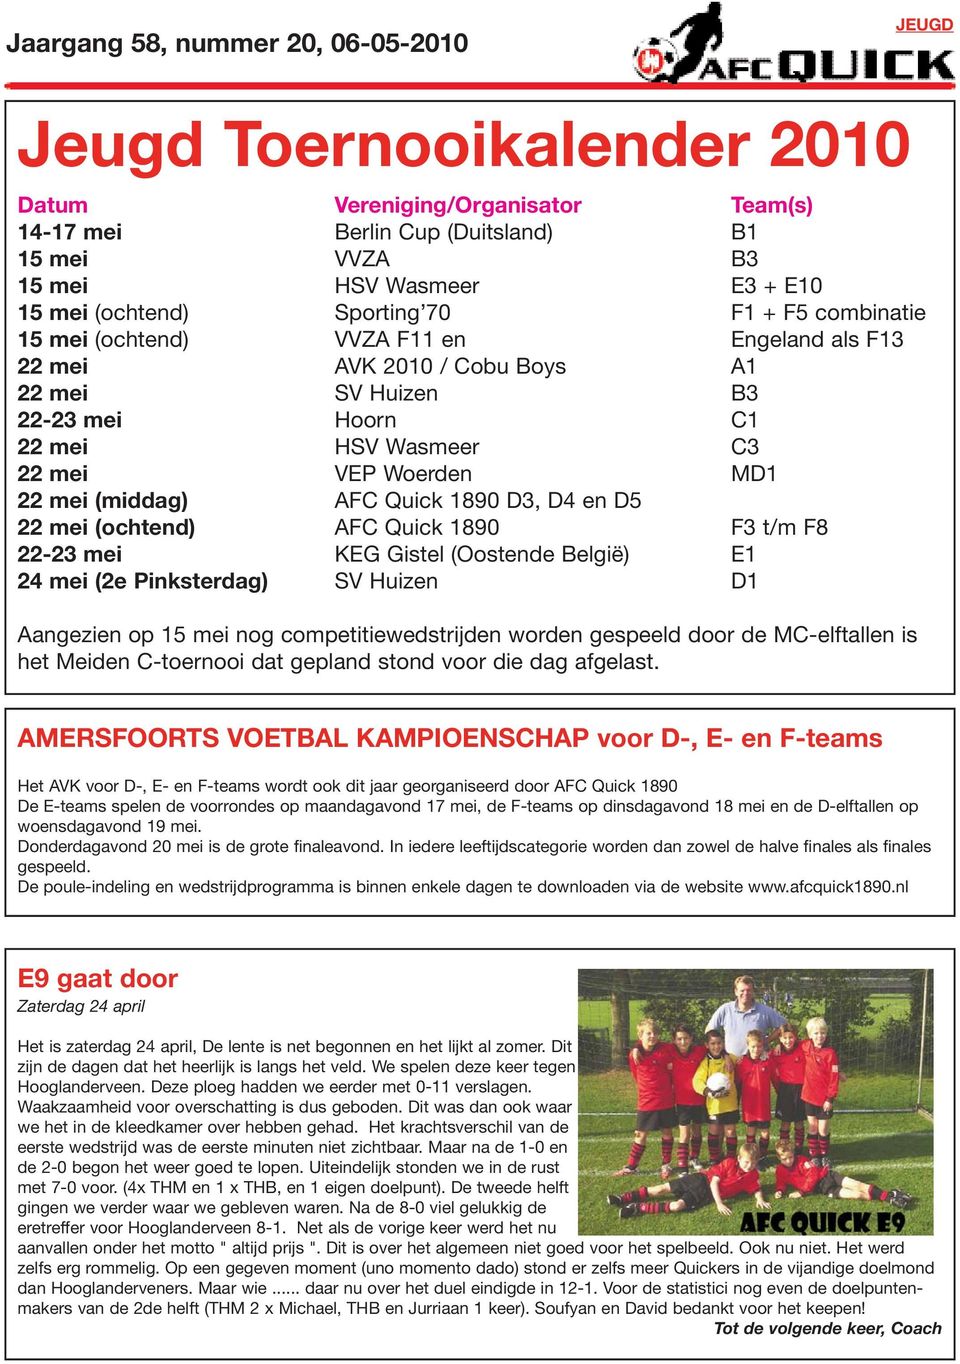 22 mei (ochtend) AFC Quick 1890 F3 t/m F8 22-23 mei KEG Gistel (Oostende België) E1 24 mei (2e Pinksterdag) SV Huizen D1 Aangezien op 15 mei nog competitiewedstrijden worden gespeeld door de